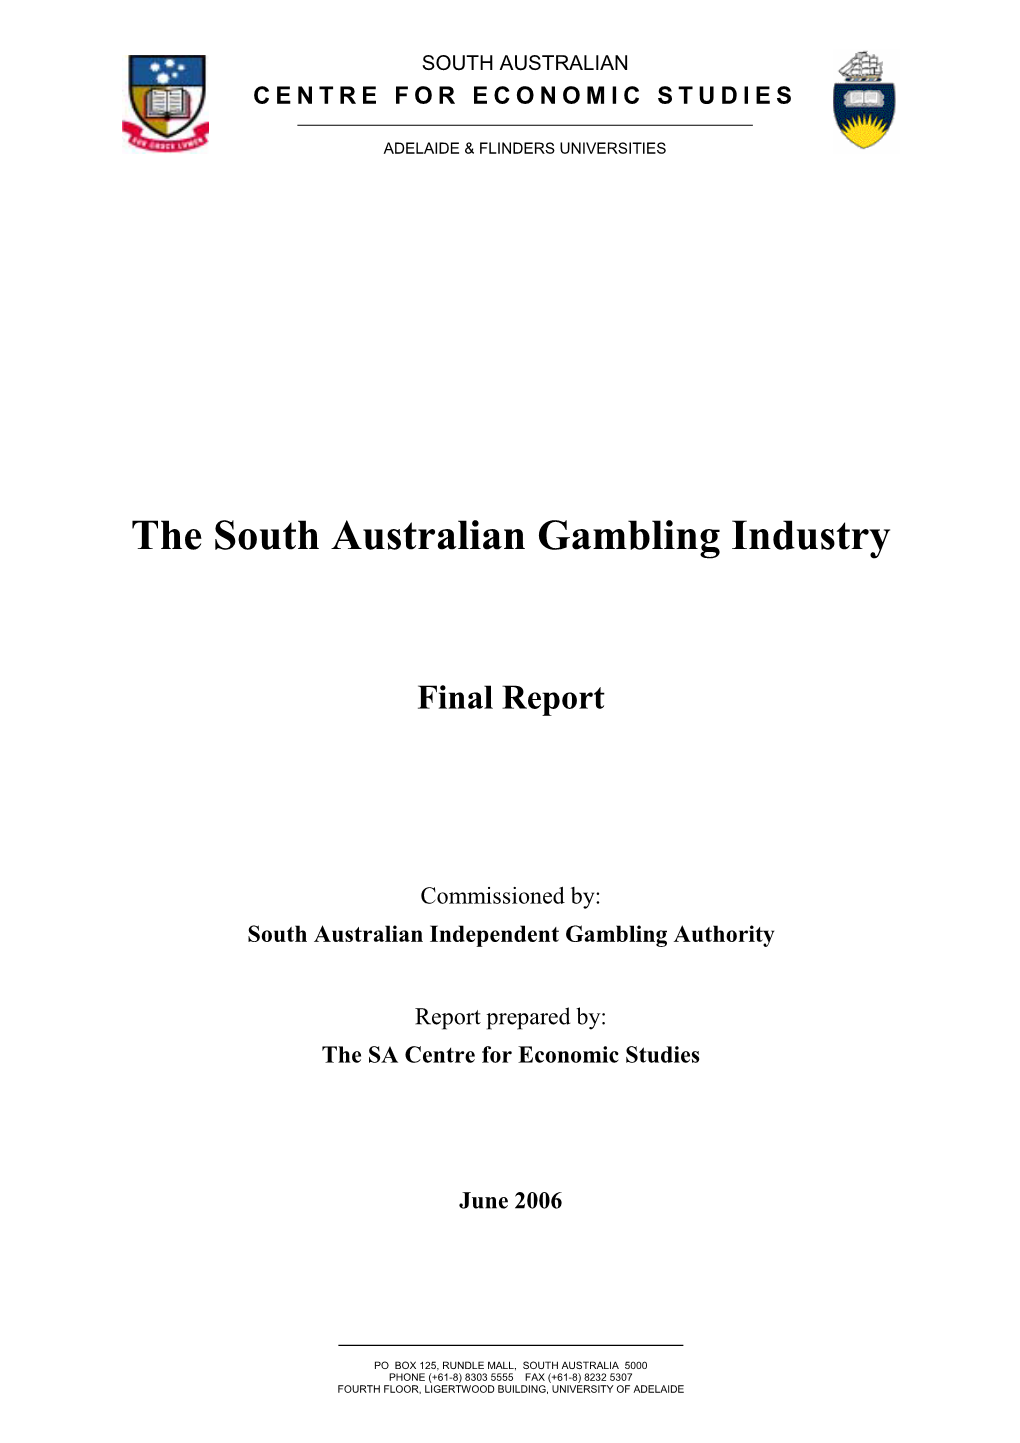 The South Australian Gambling Industry